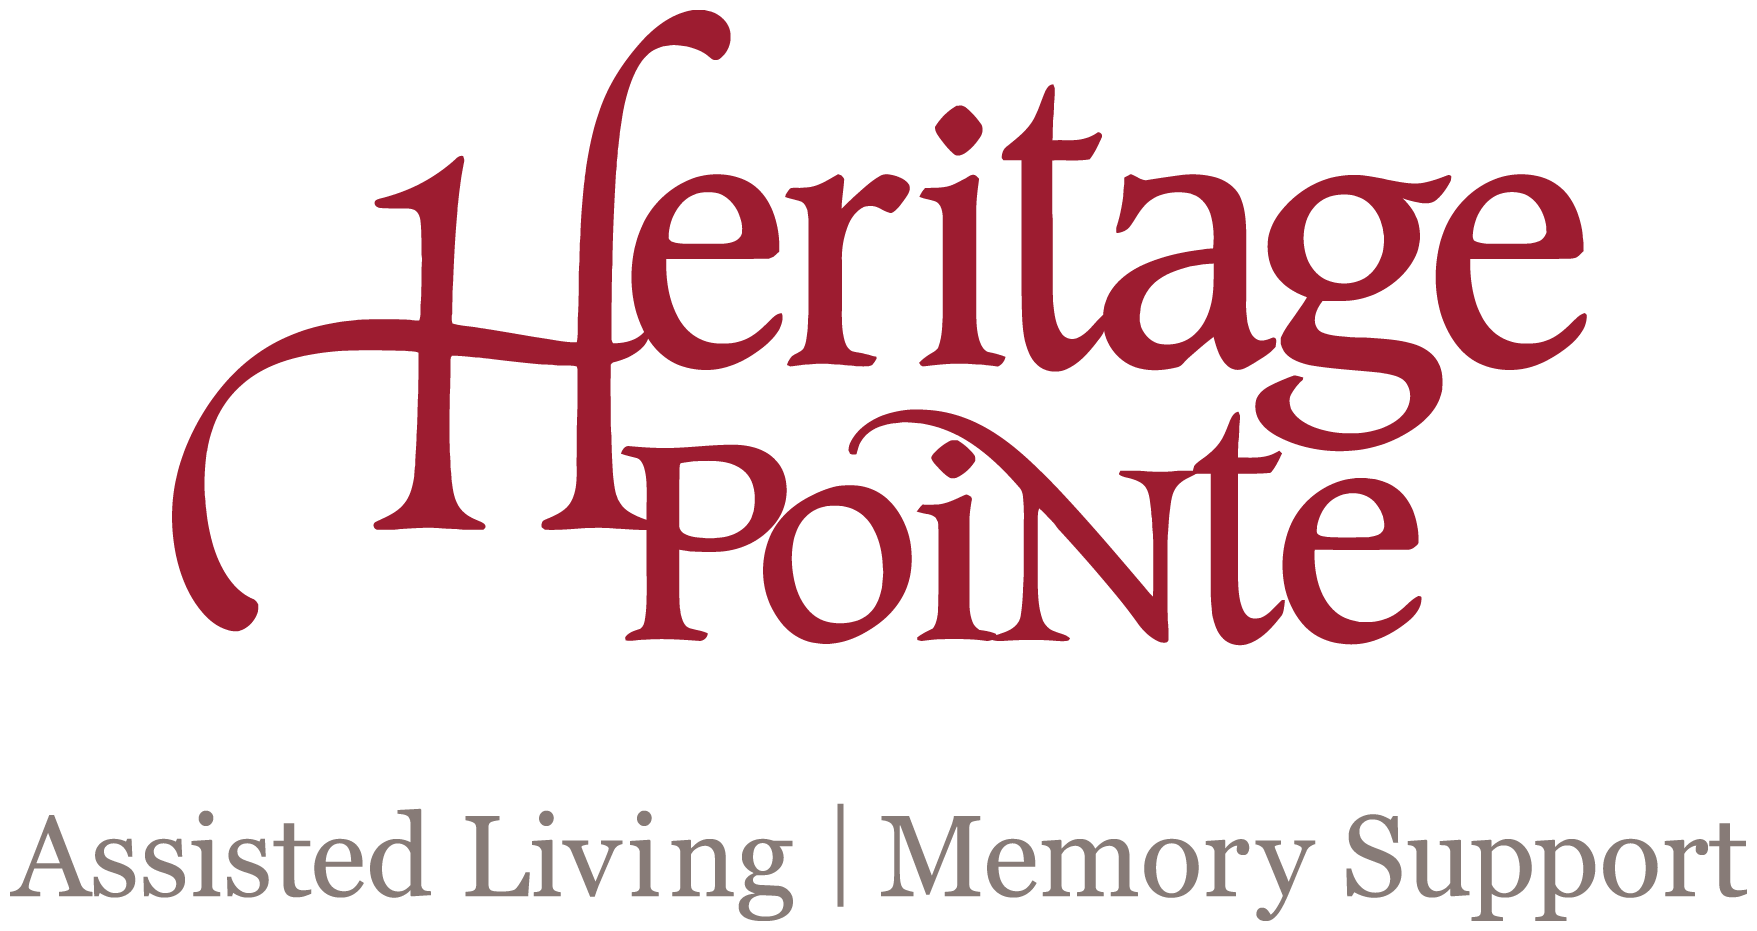 HeritagePointe_logo